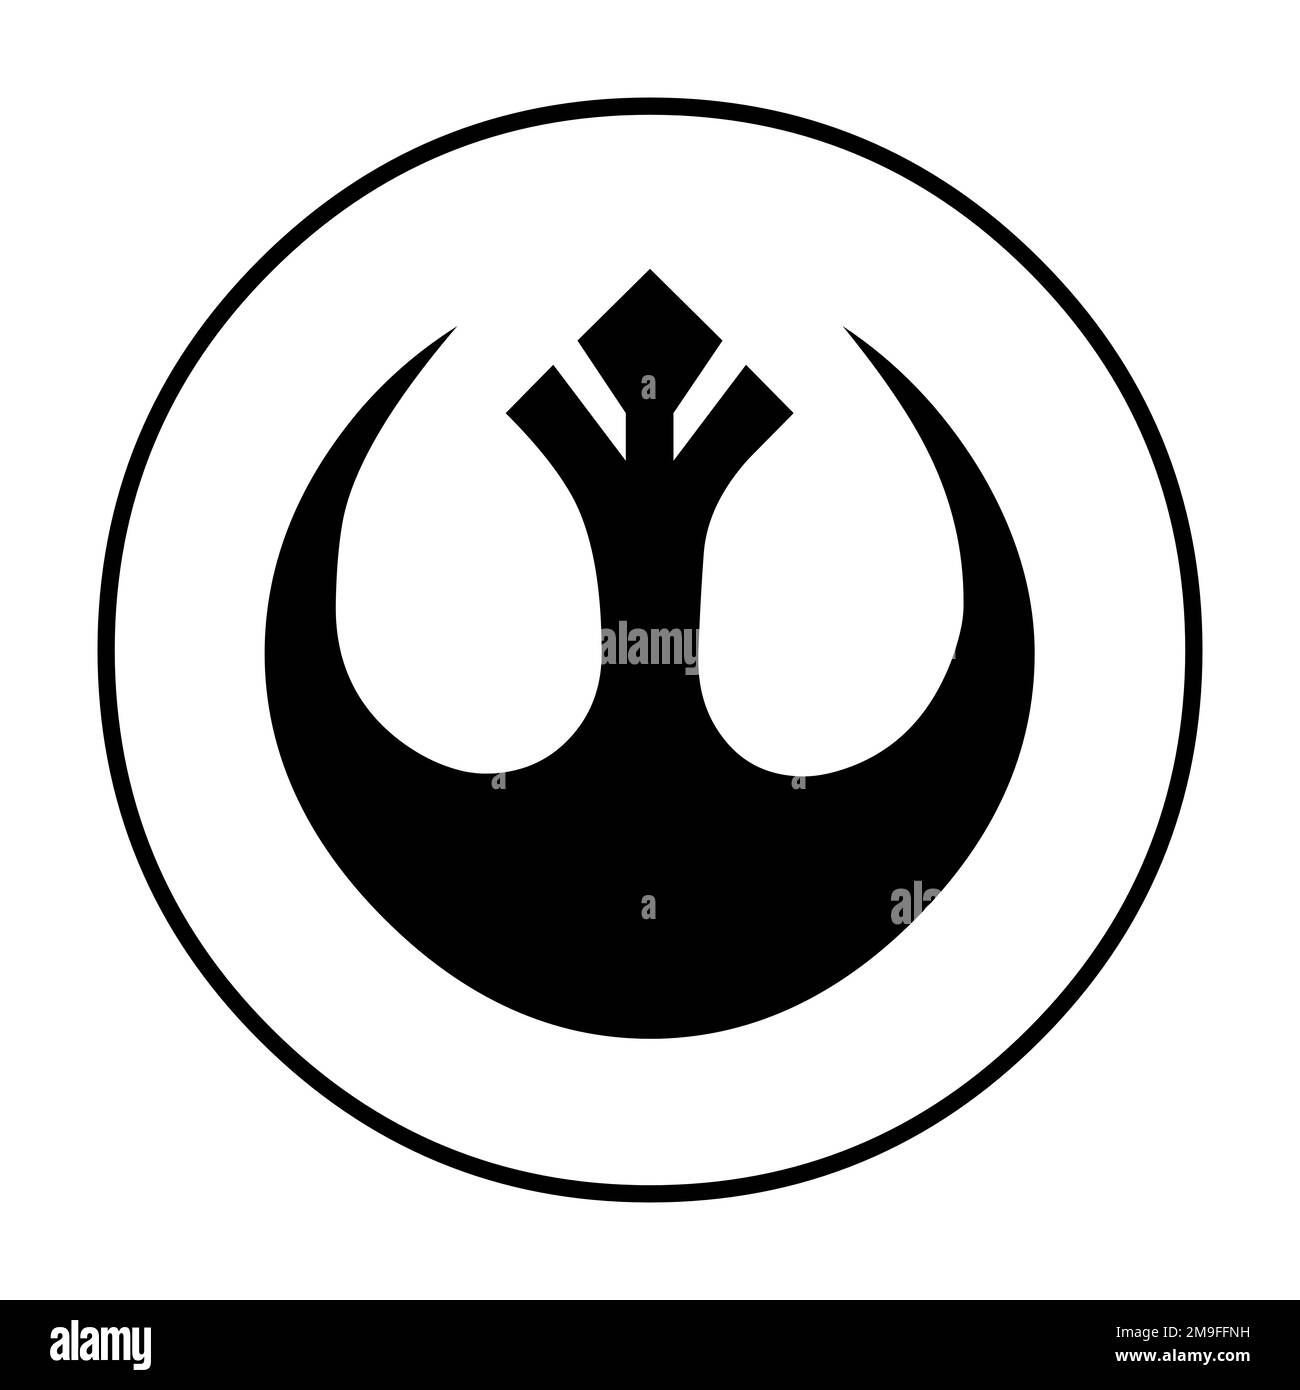 Rebel alliance symbol icon Stock Photo